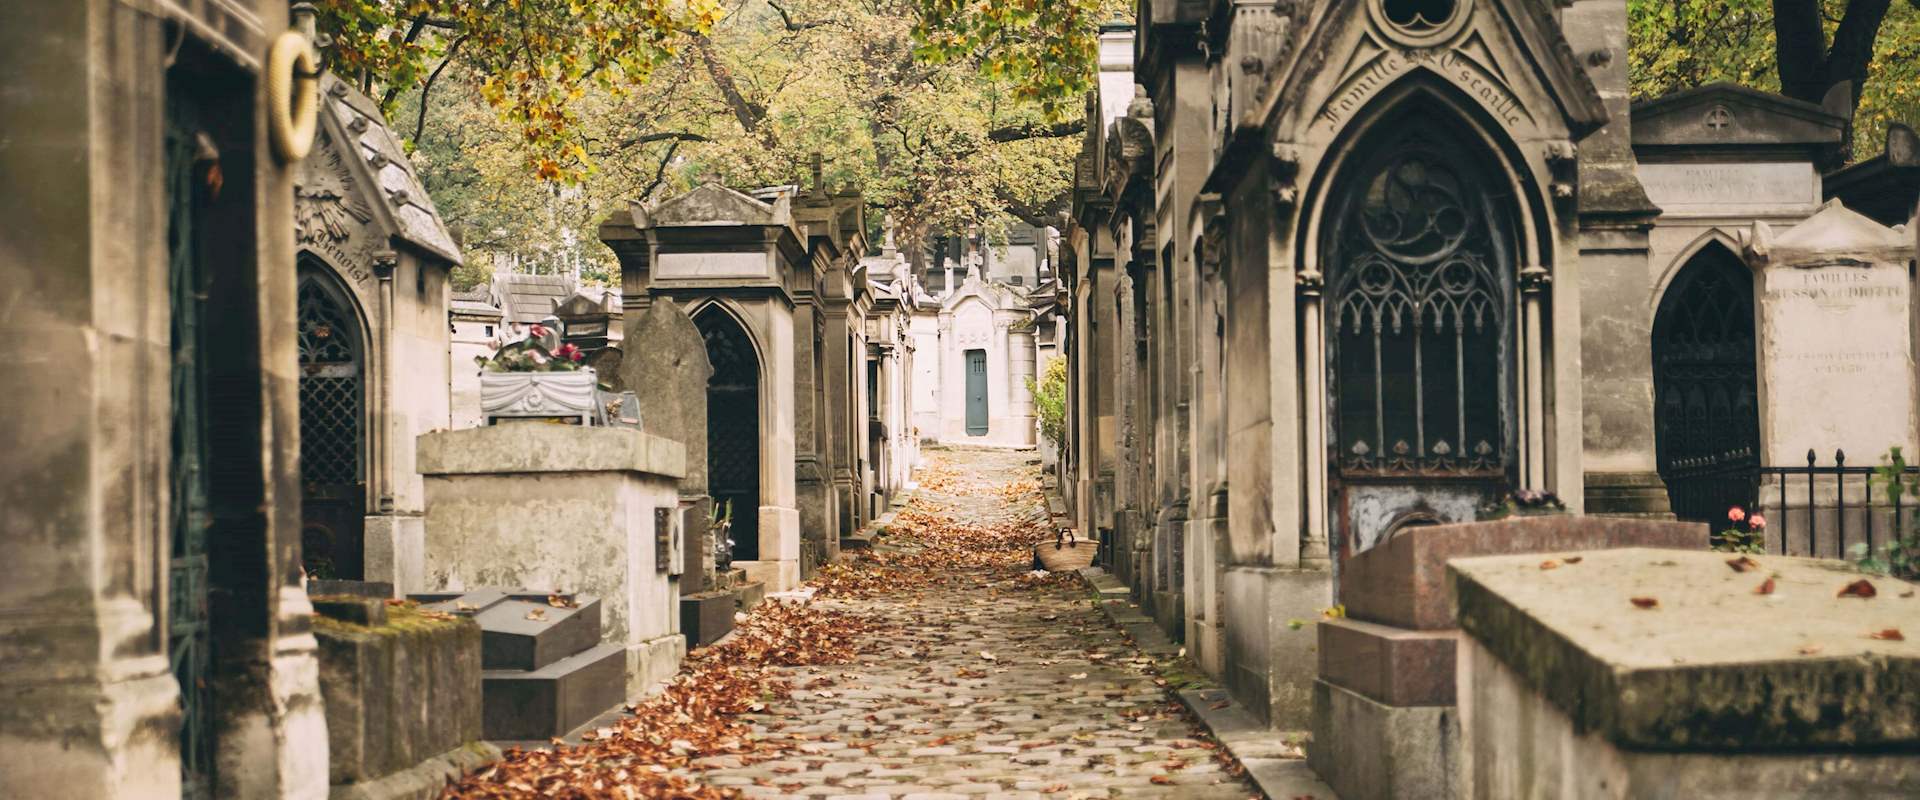 Guide-to-the-Art-in-Paris-Cemeteries-PreLachaise